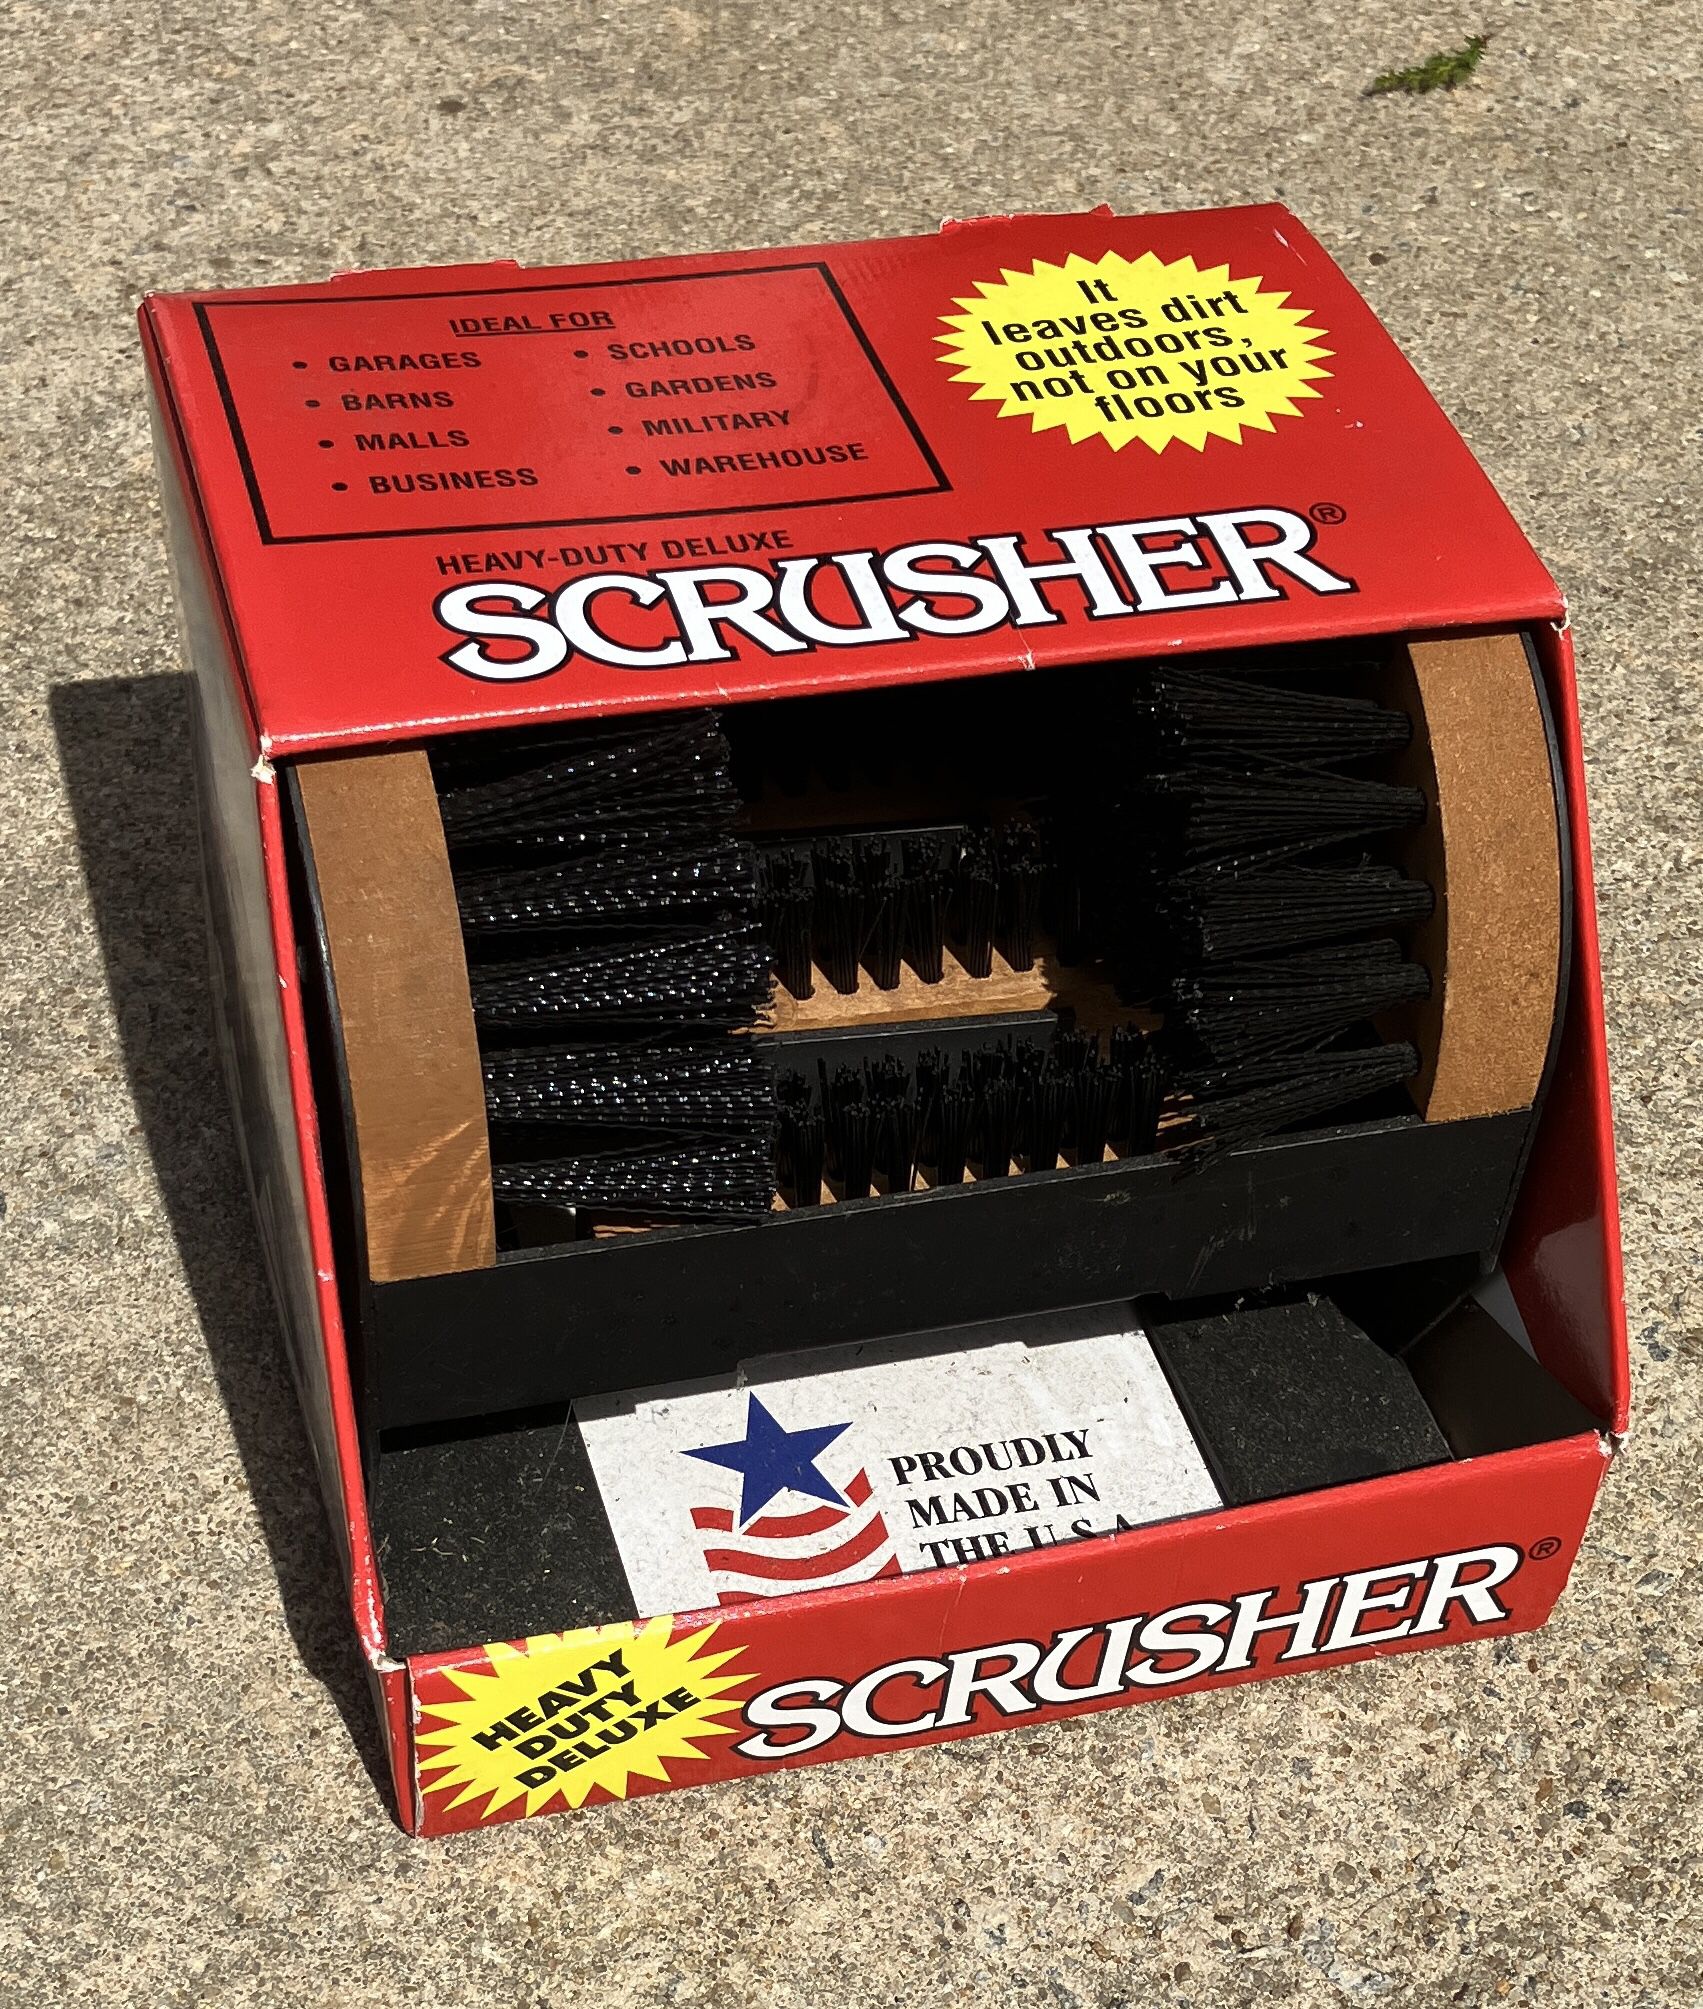 Boot Scraper New In Box $25